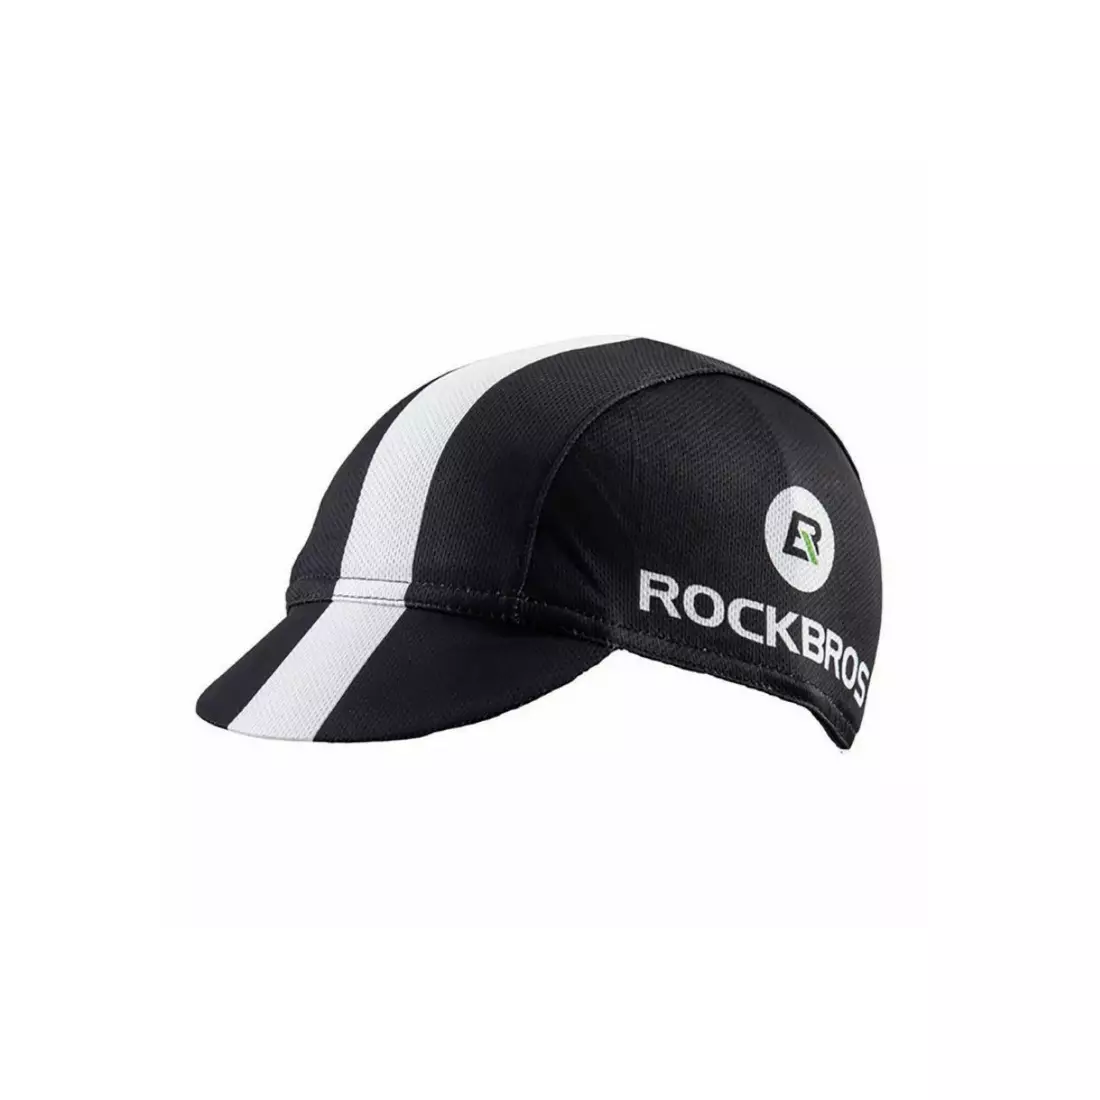 Rockbros cycling cap, black MZ10015